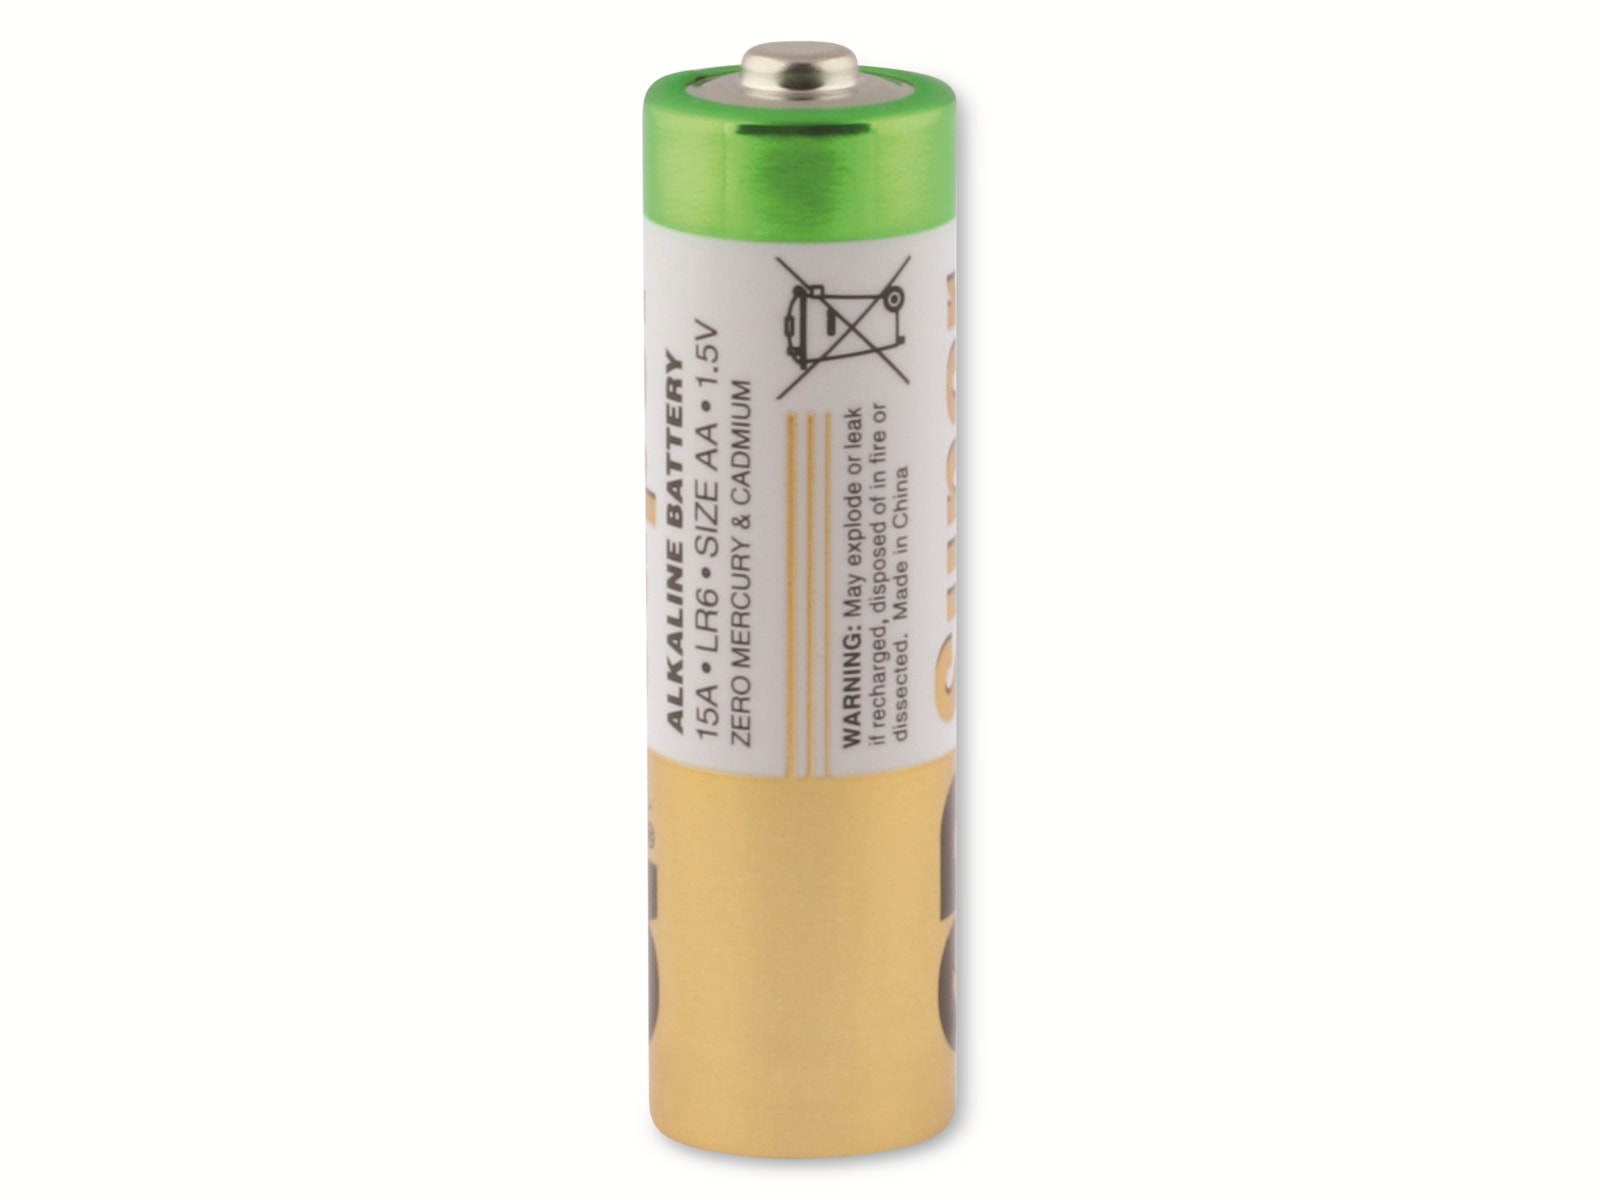 GP Super Alkaline-Mignon-Batterie LR06, 1,5V, 80 Stück